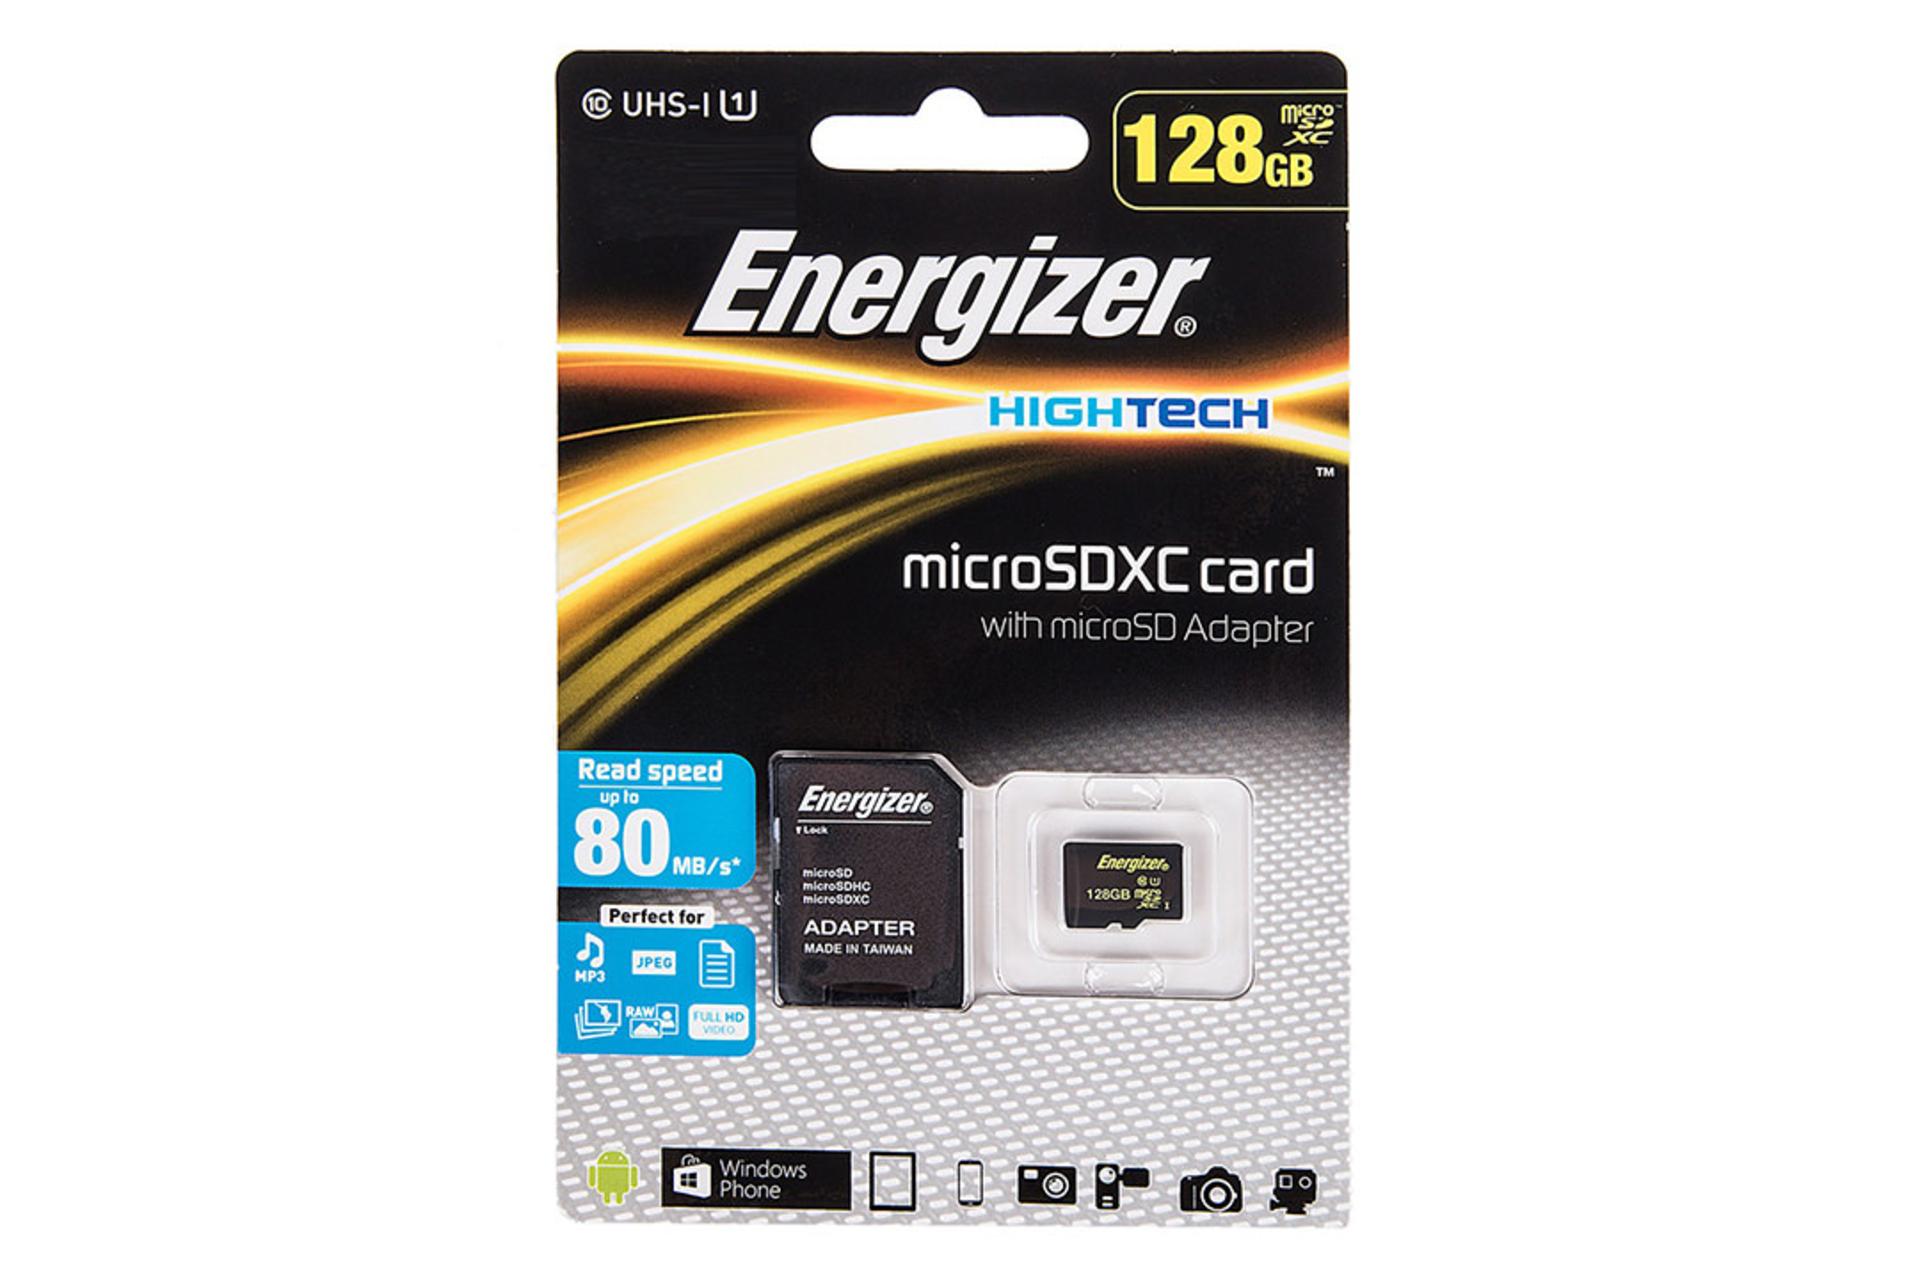 Energizer Hightech microSDXC Class 10 UHS-I U1 128GB